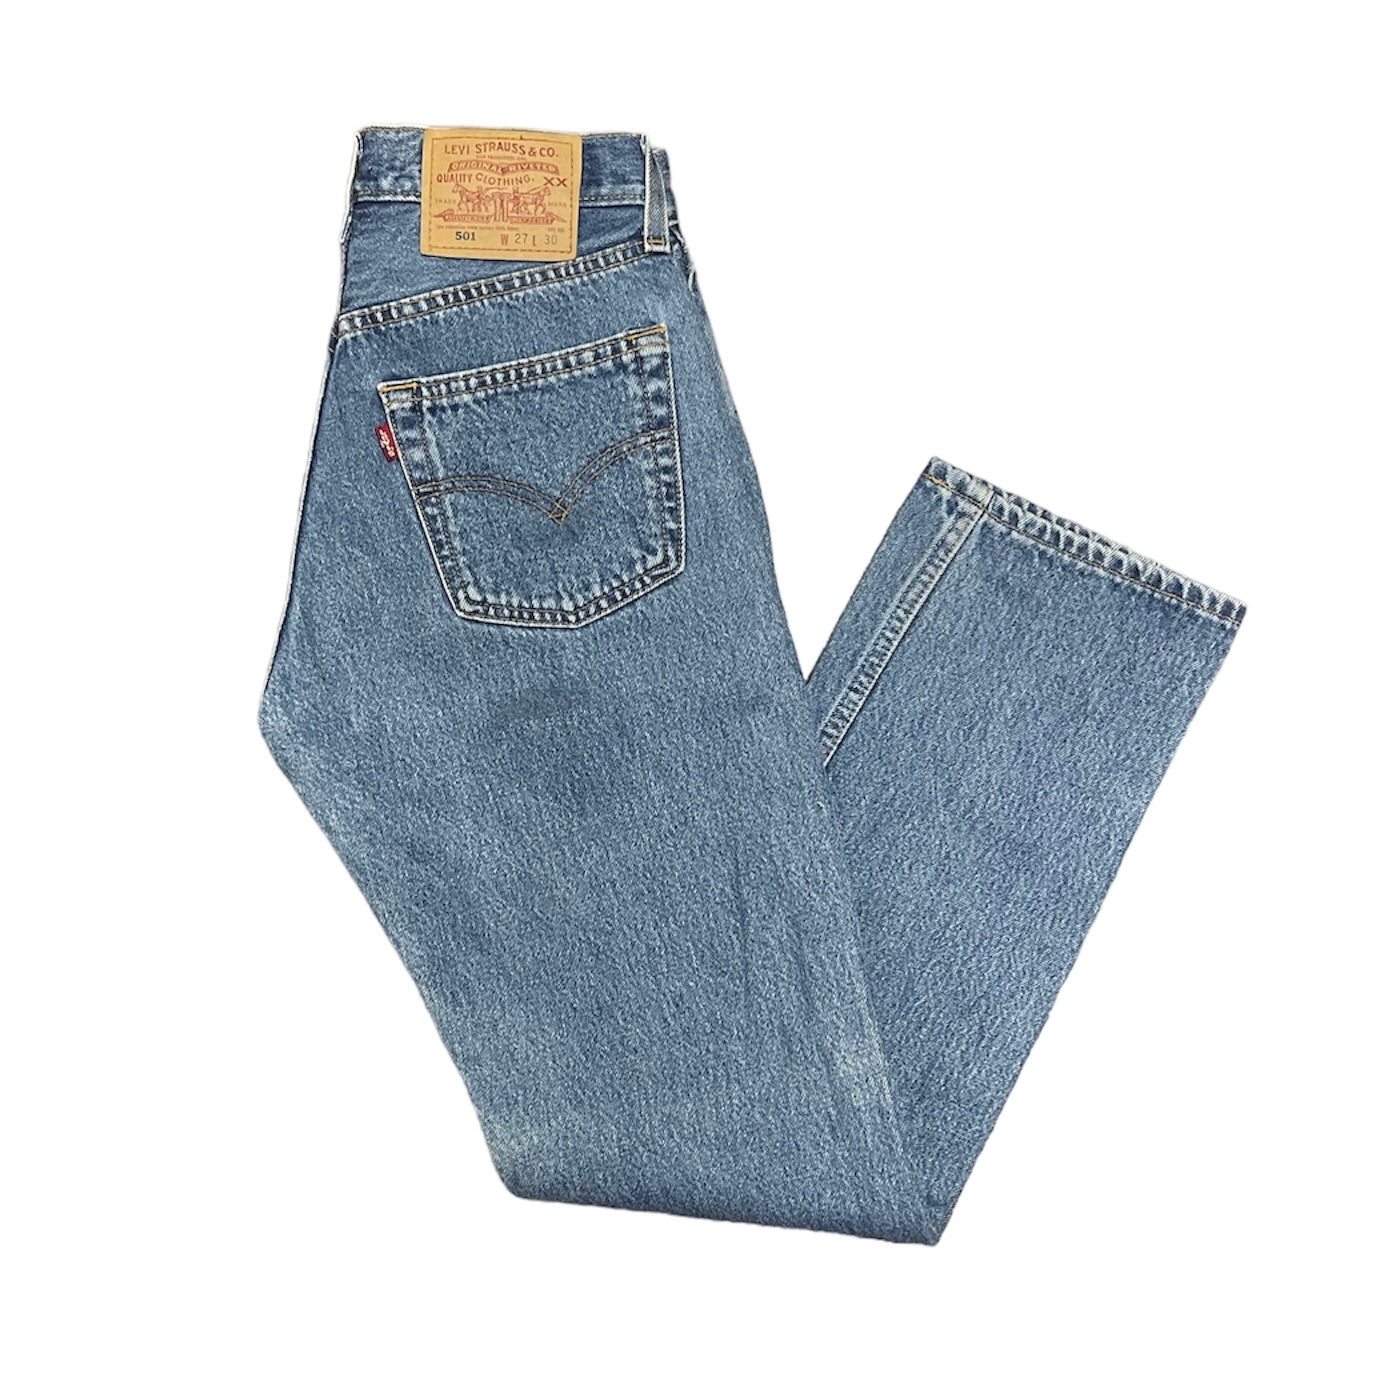 Vintage Levis 501 Vintage Blue Jeans